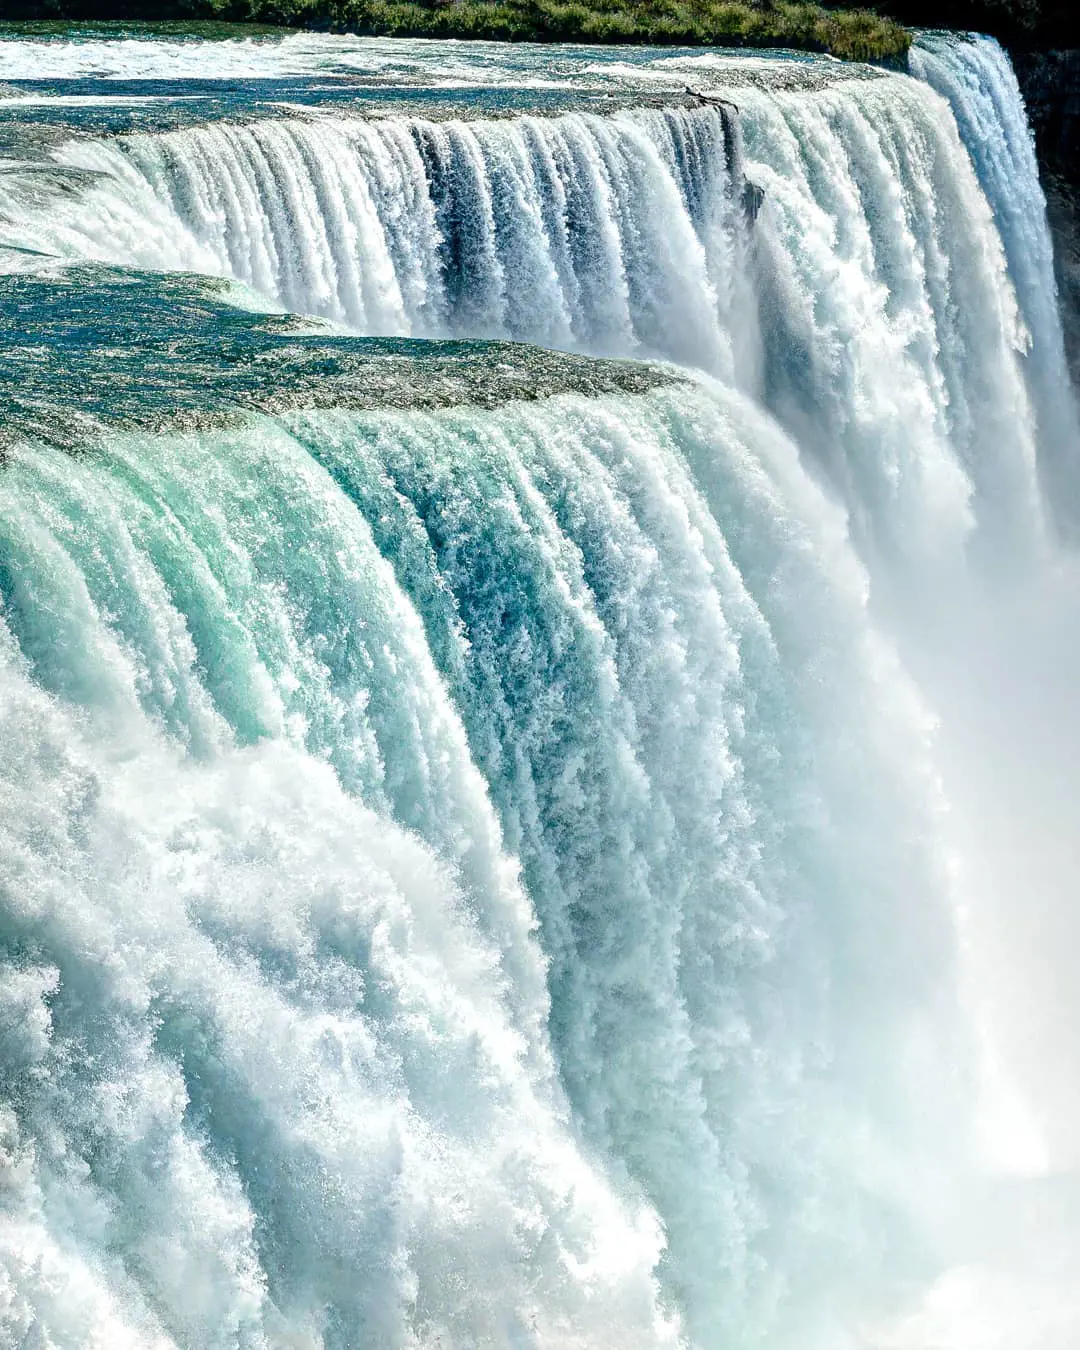 Beautiful waterfalls' aerial view in Niagara Falls USA (photo by @jonaslegarth)